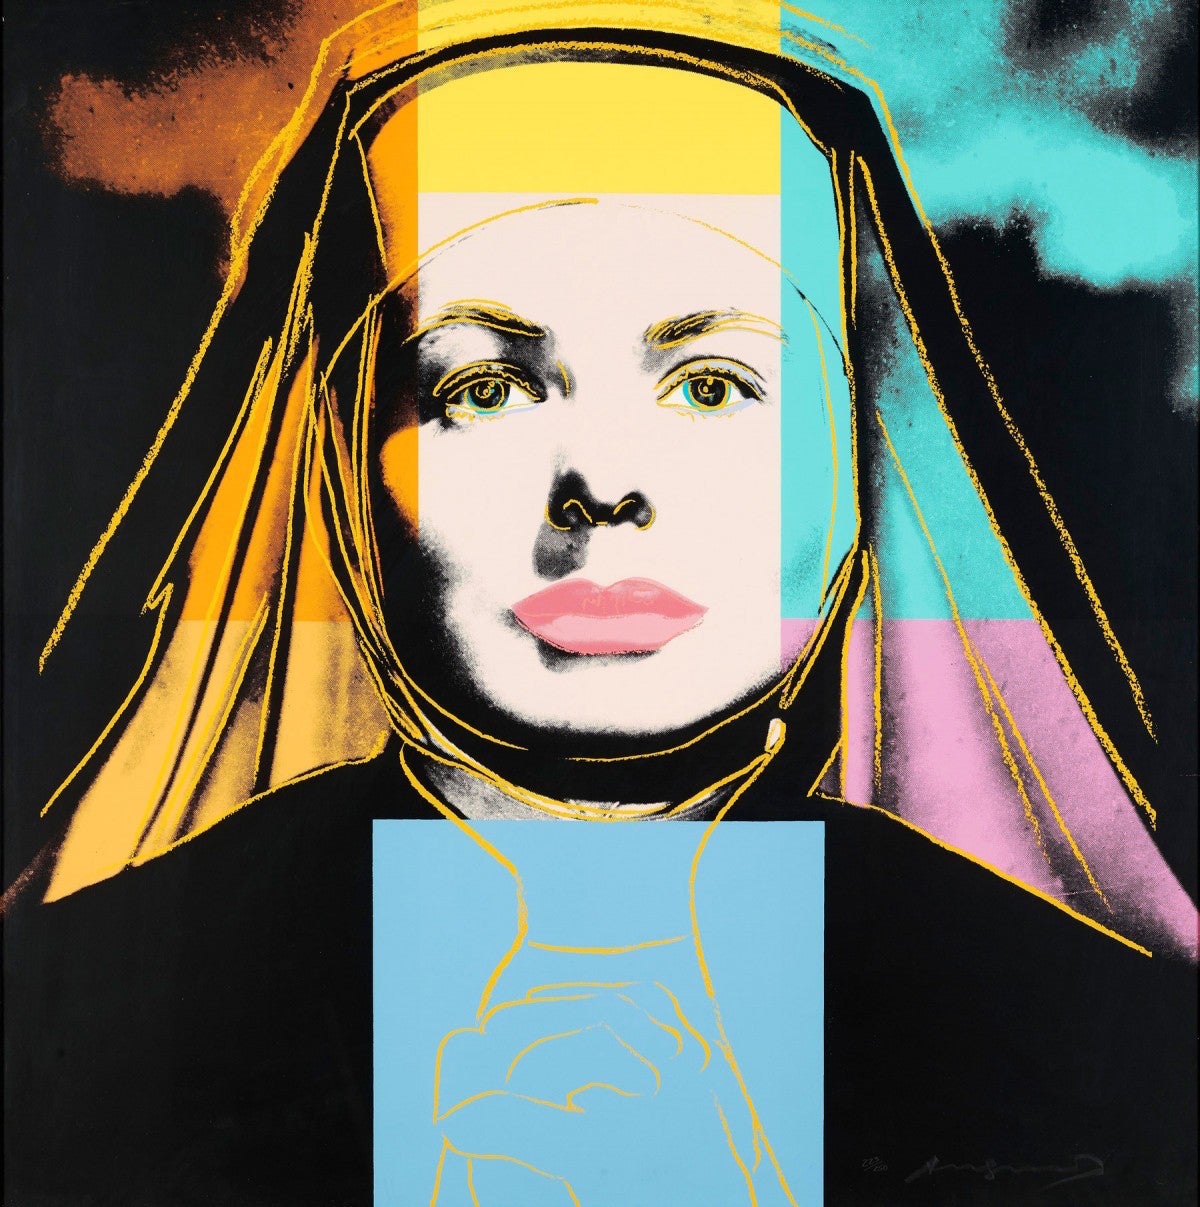 The Nun, Ingrid Bergman FS II.314 - Print by Andy Warhol